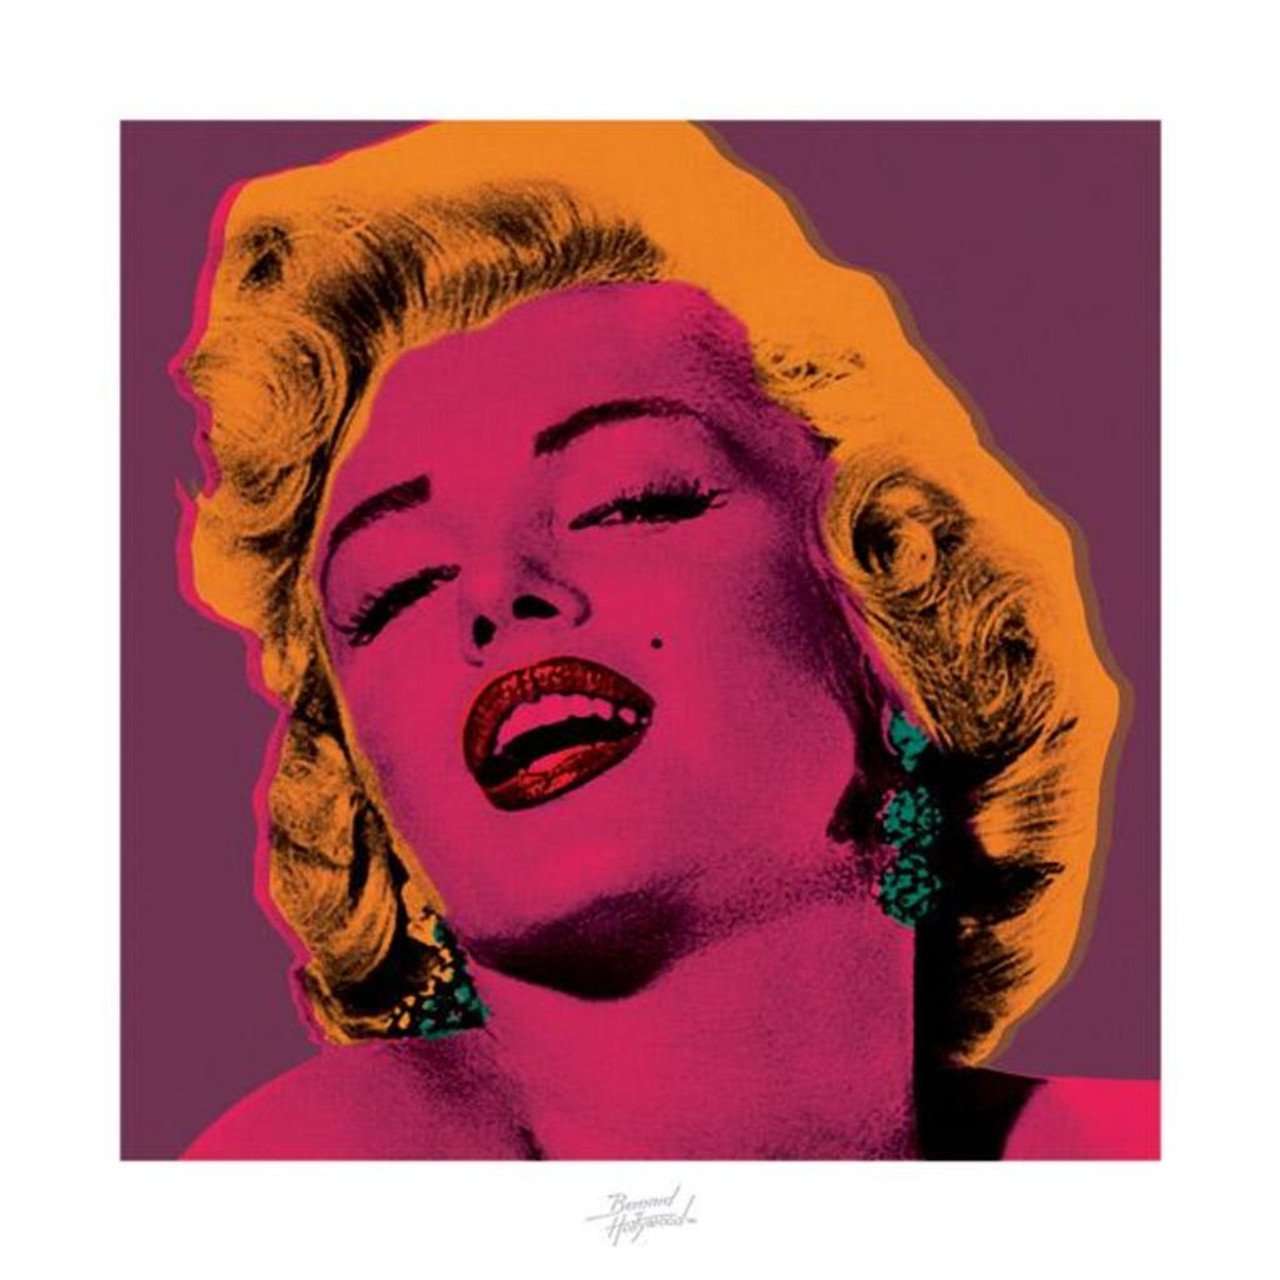 Bernard of Hollywood Marilyn Monroe Pop Art Cool Wall Decor Art Print Poster  15.75x15.75 - Poster Foundry